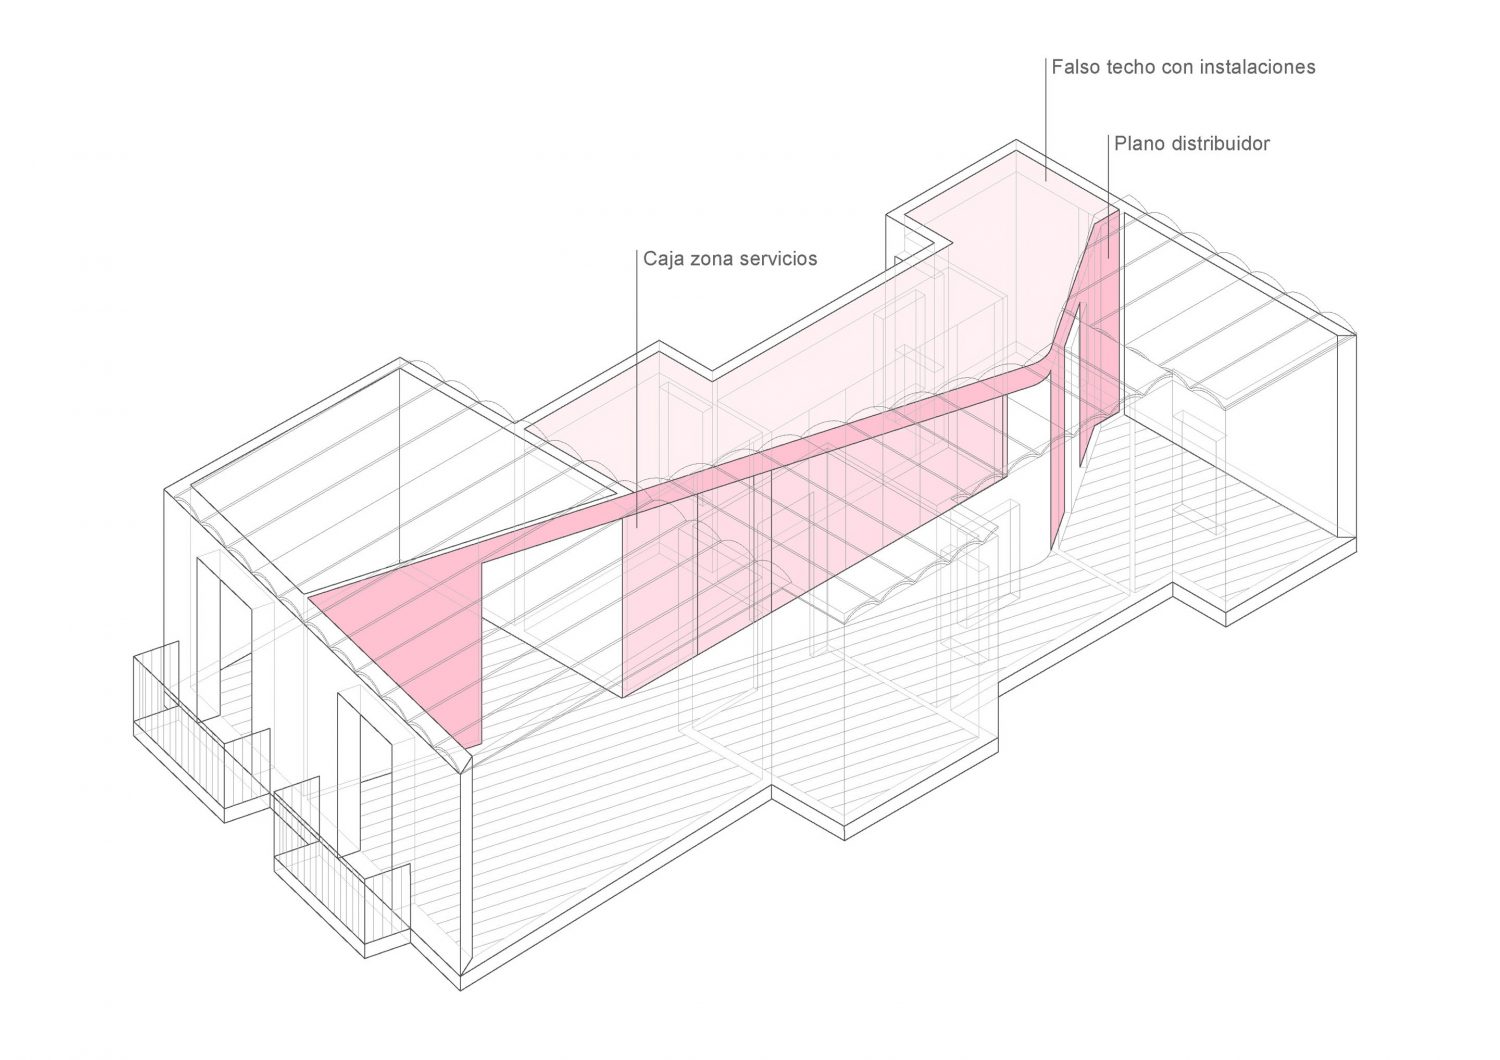 Refurbishment of an Apartment in Barcelona by Allaround Lab